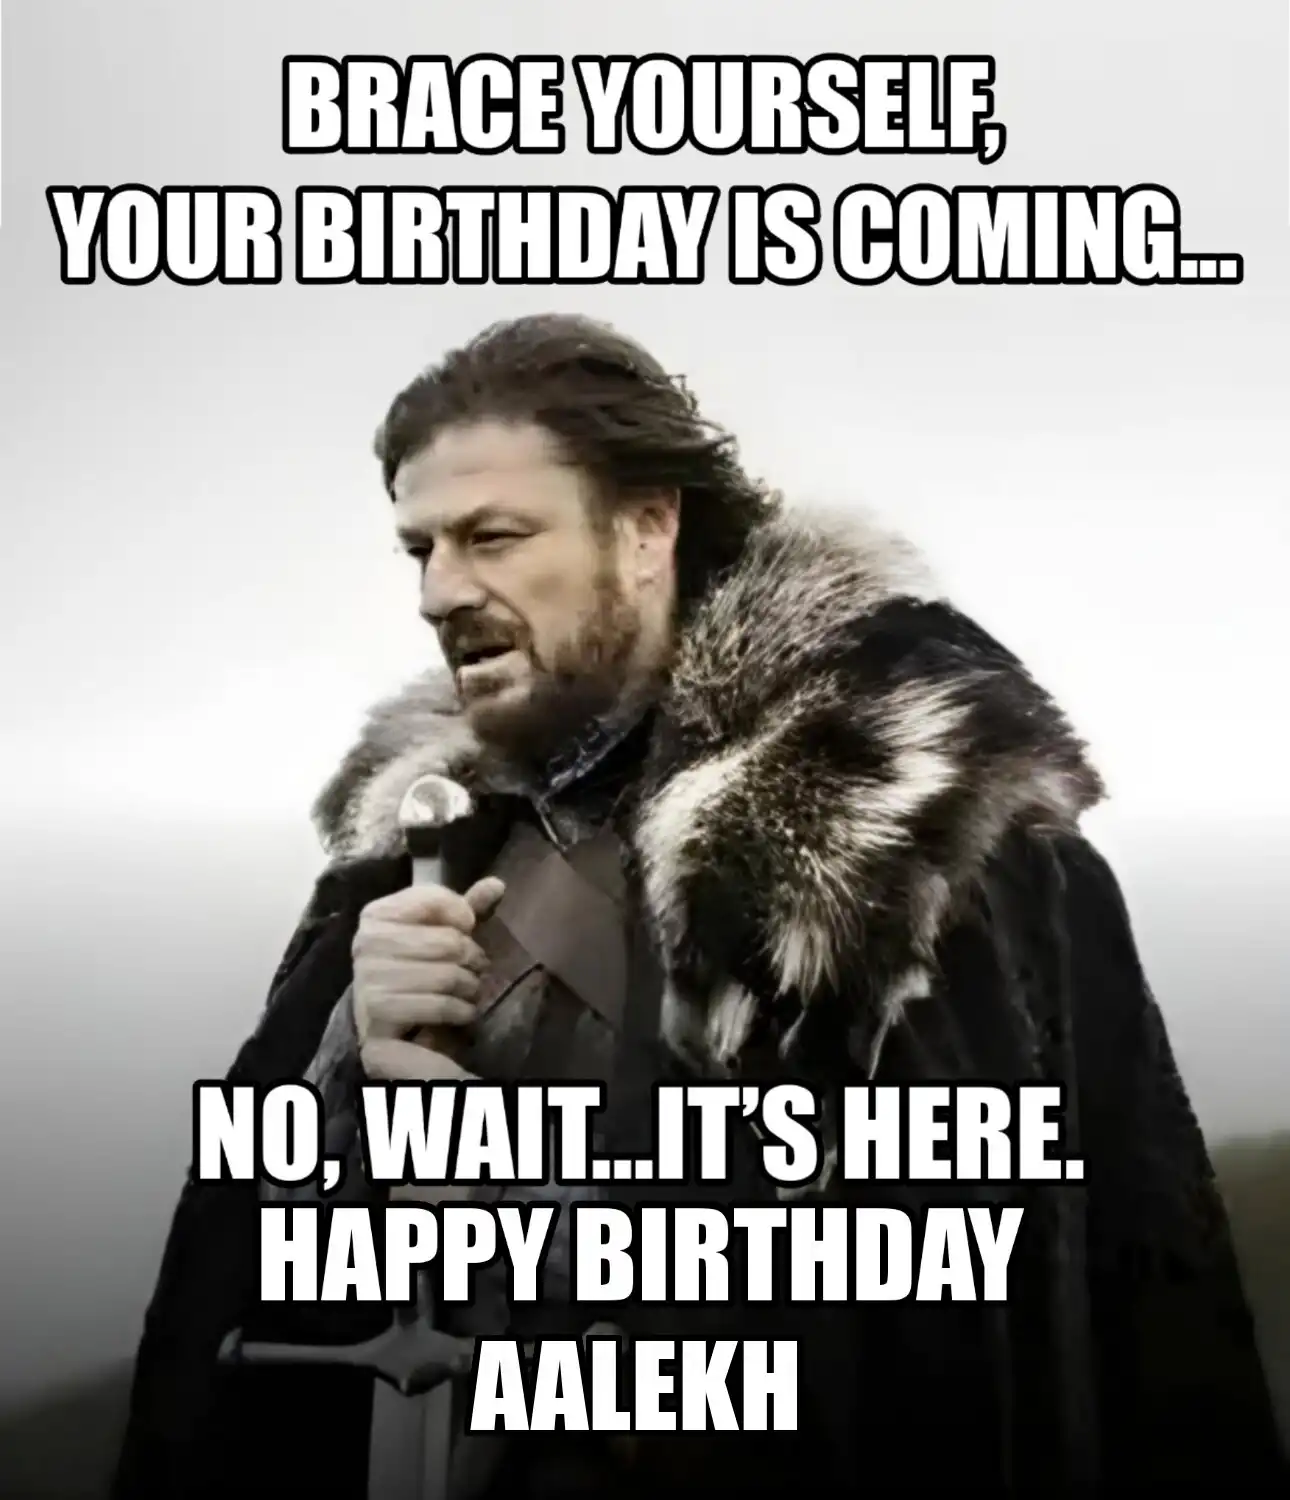 Happy Birthday Aalekh Brace Yourself Your Birthday Is Coming Meme